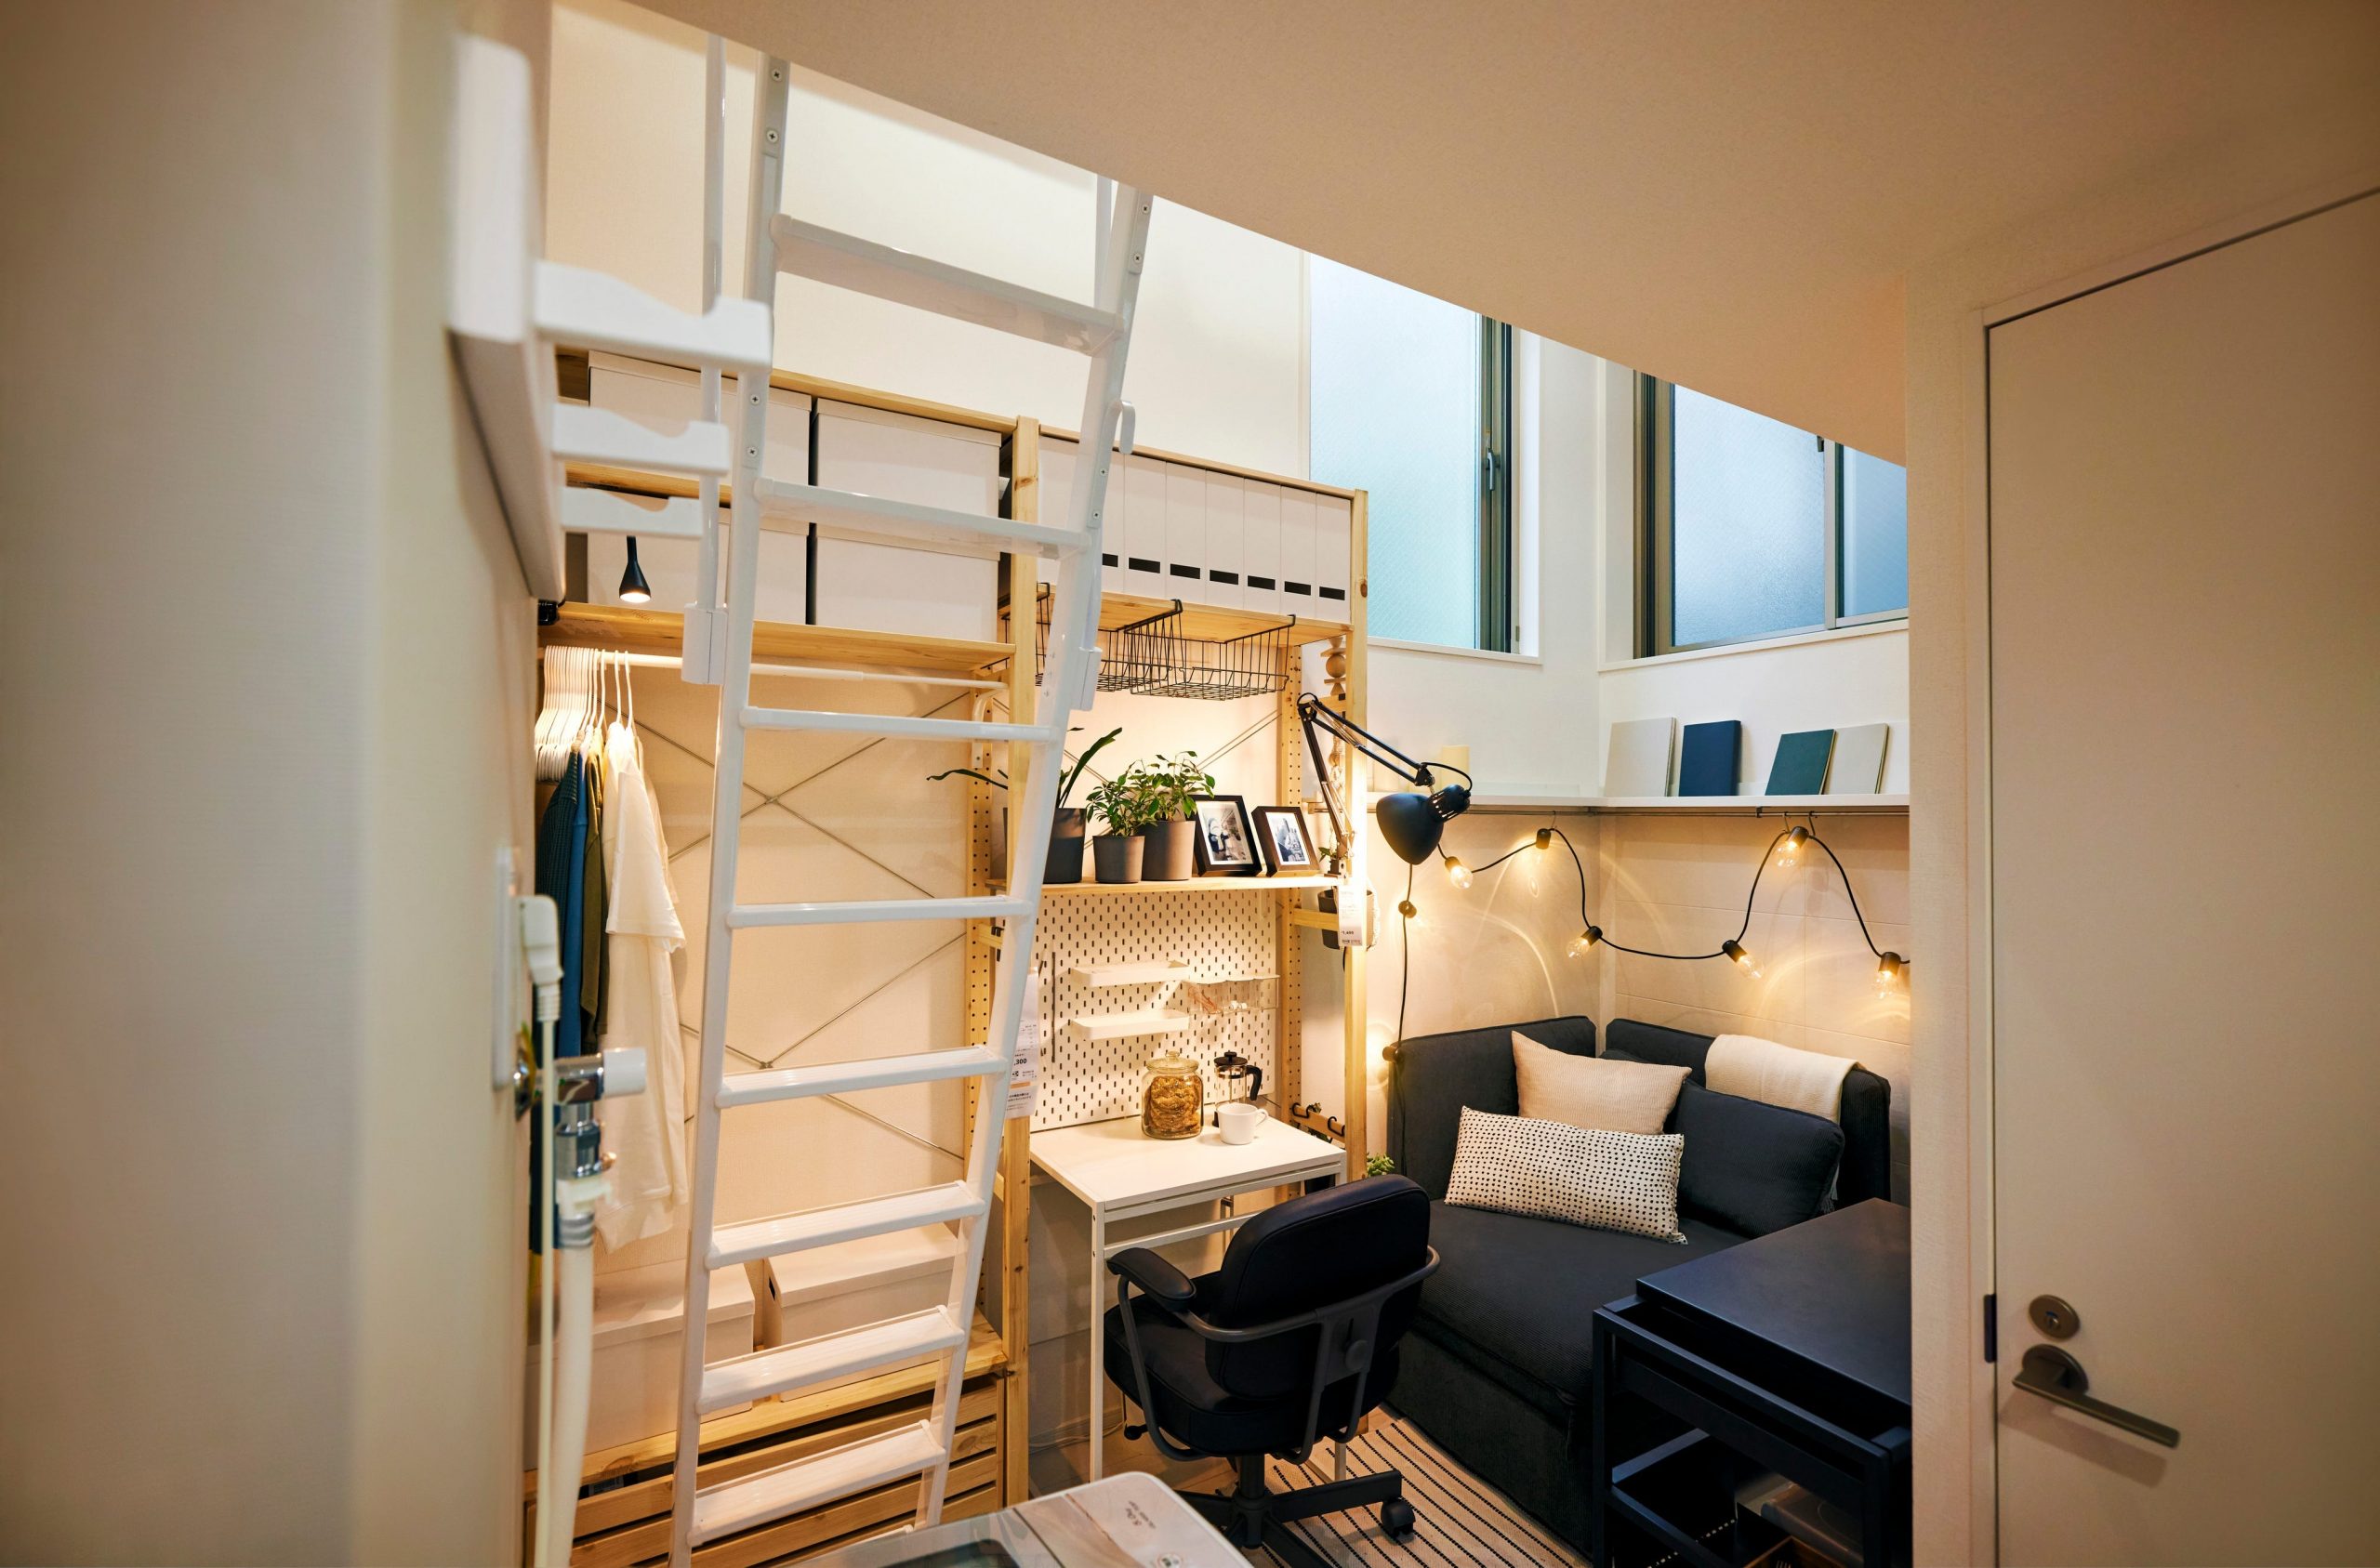 Ikea Japan tiny apartment